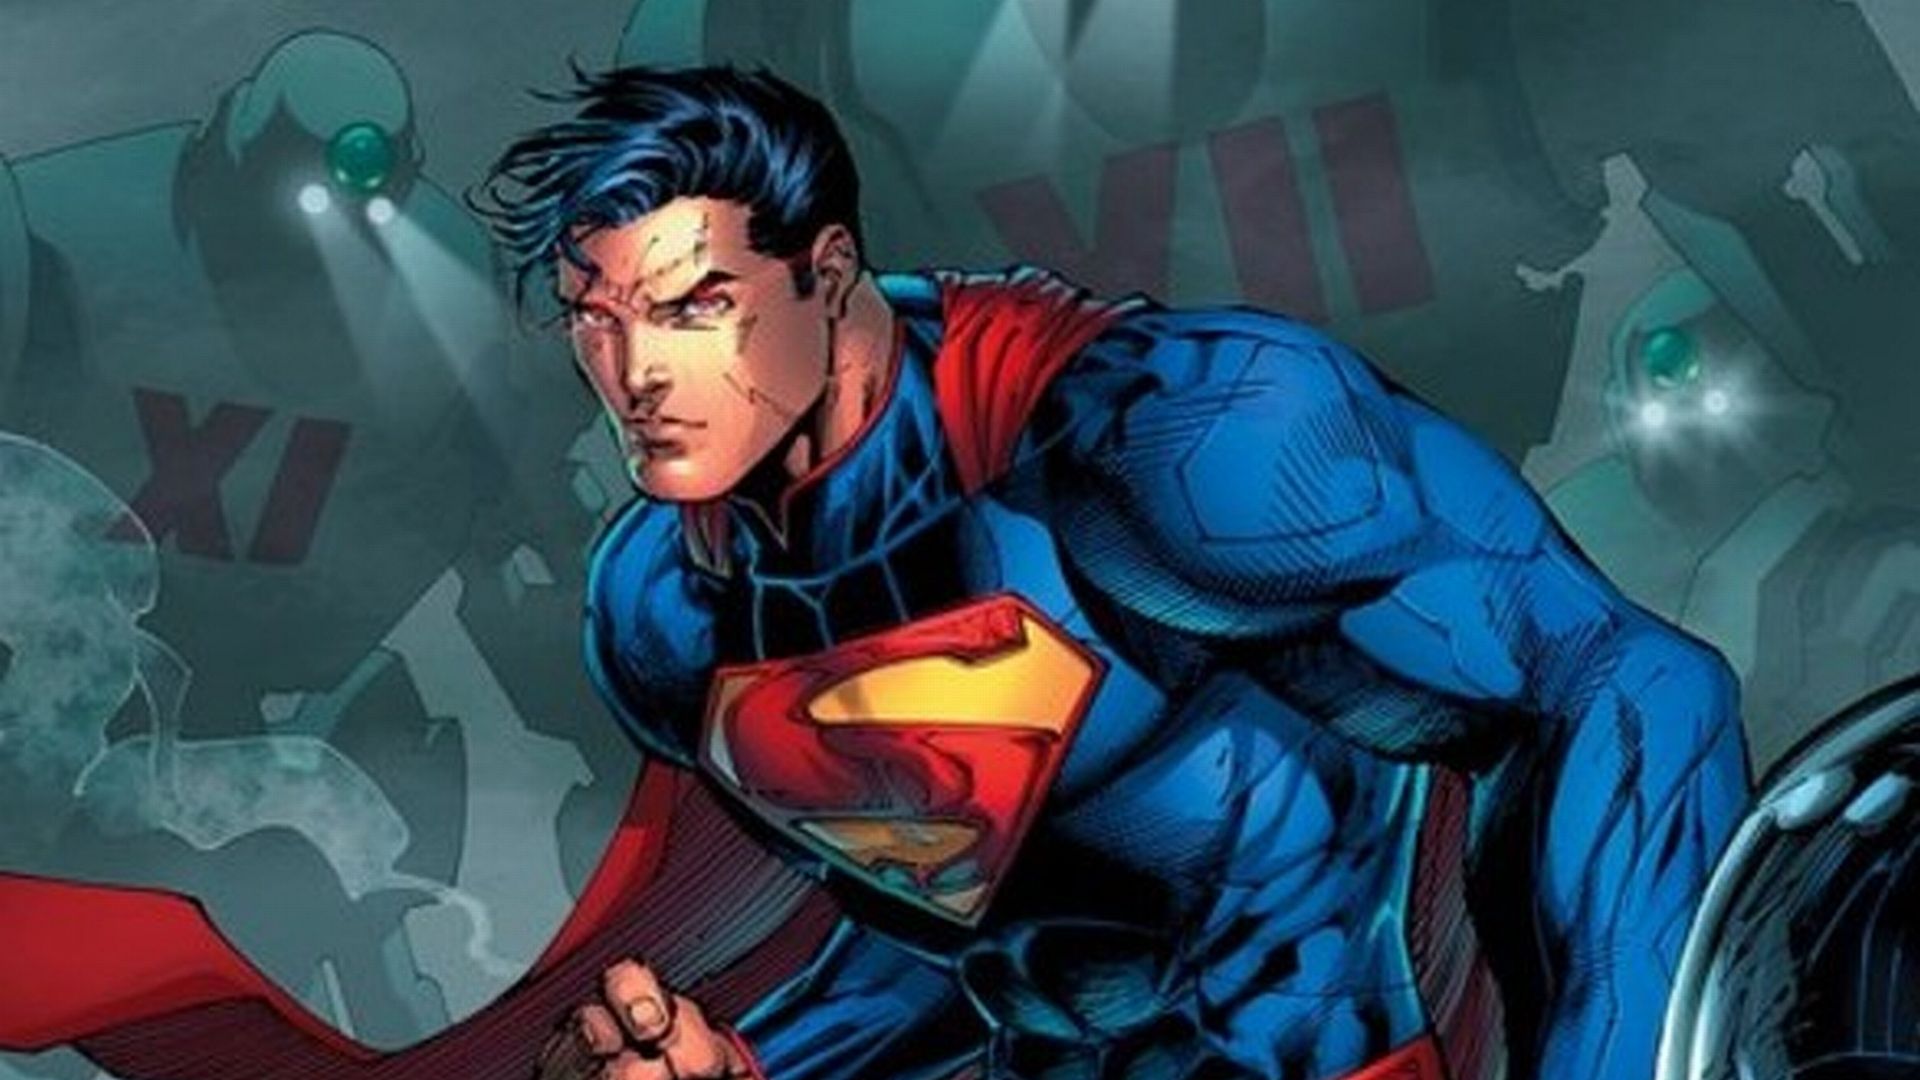 Superman Wallpaper Backgrounds